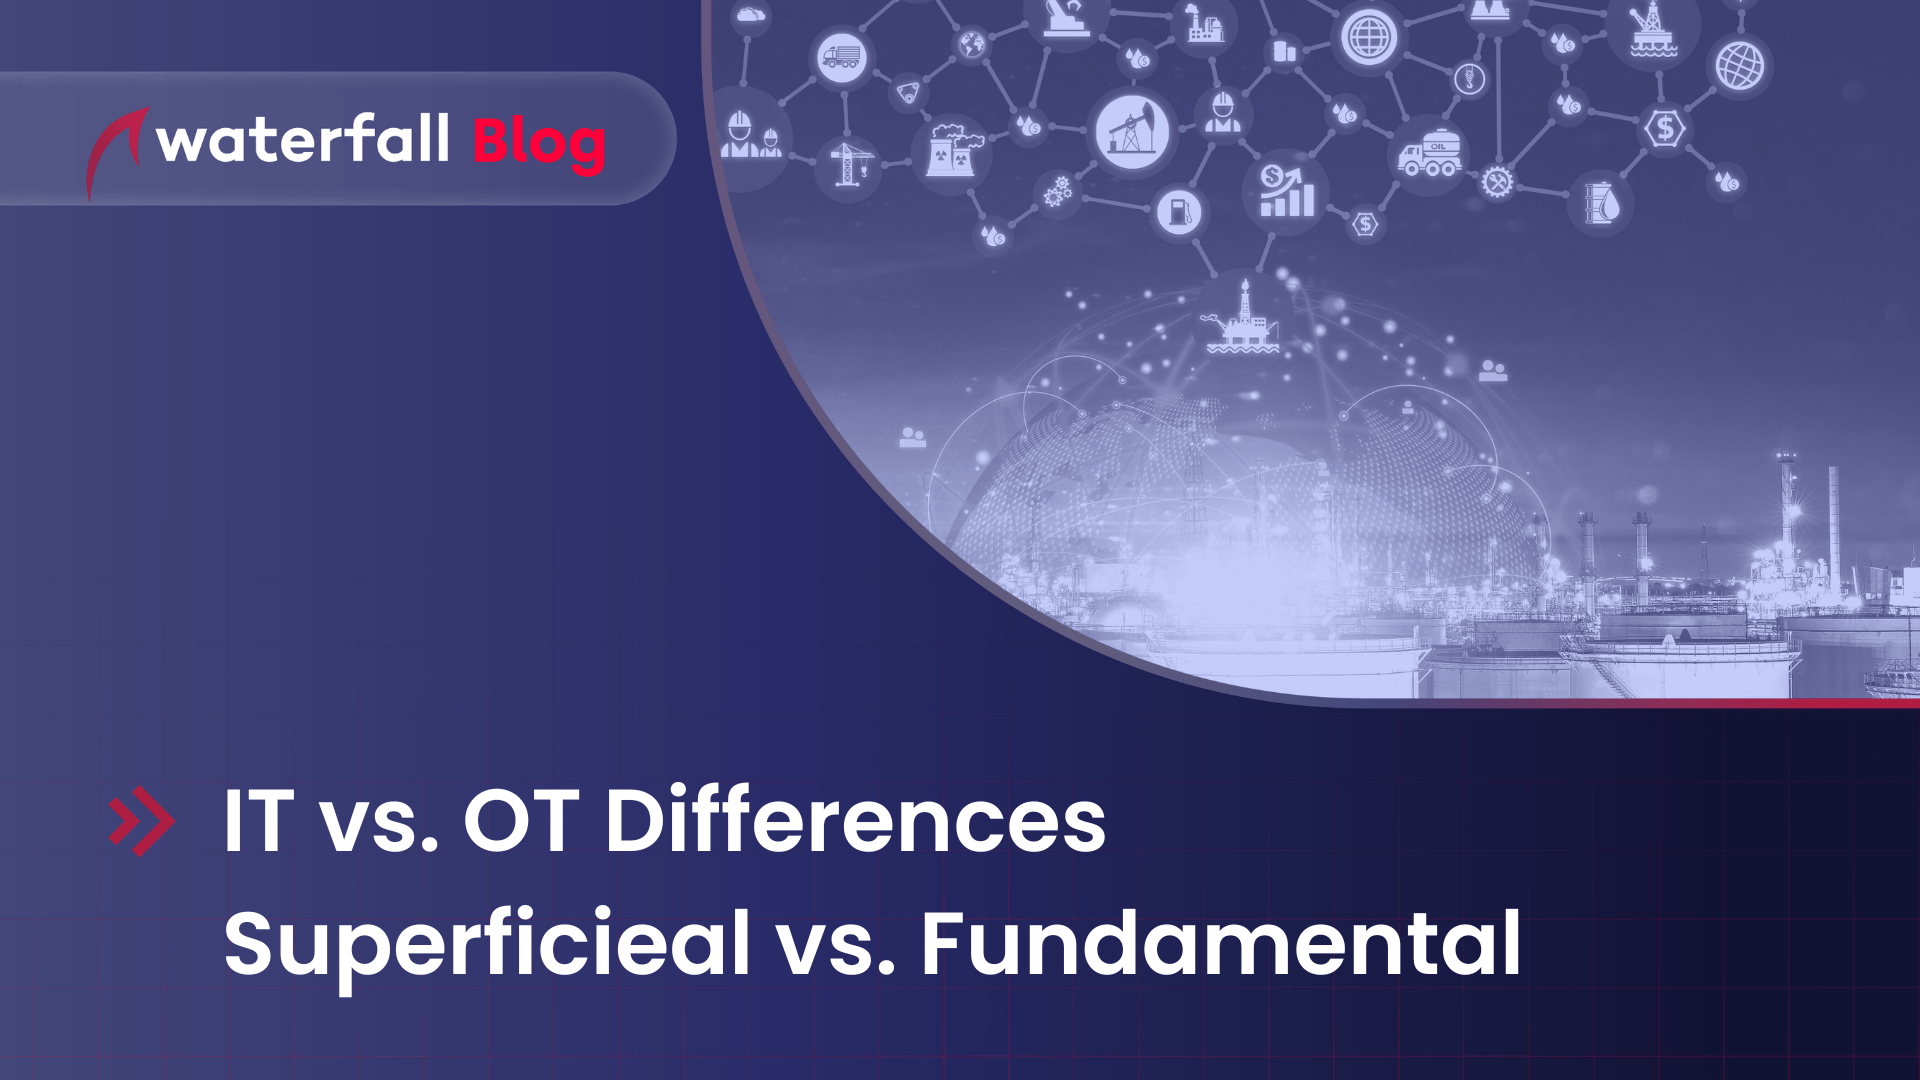 IT vs. OT Differences, Superficial vs. Fundamental